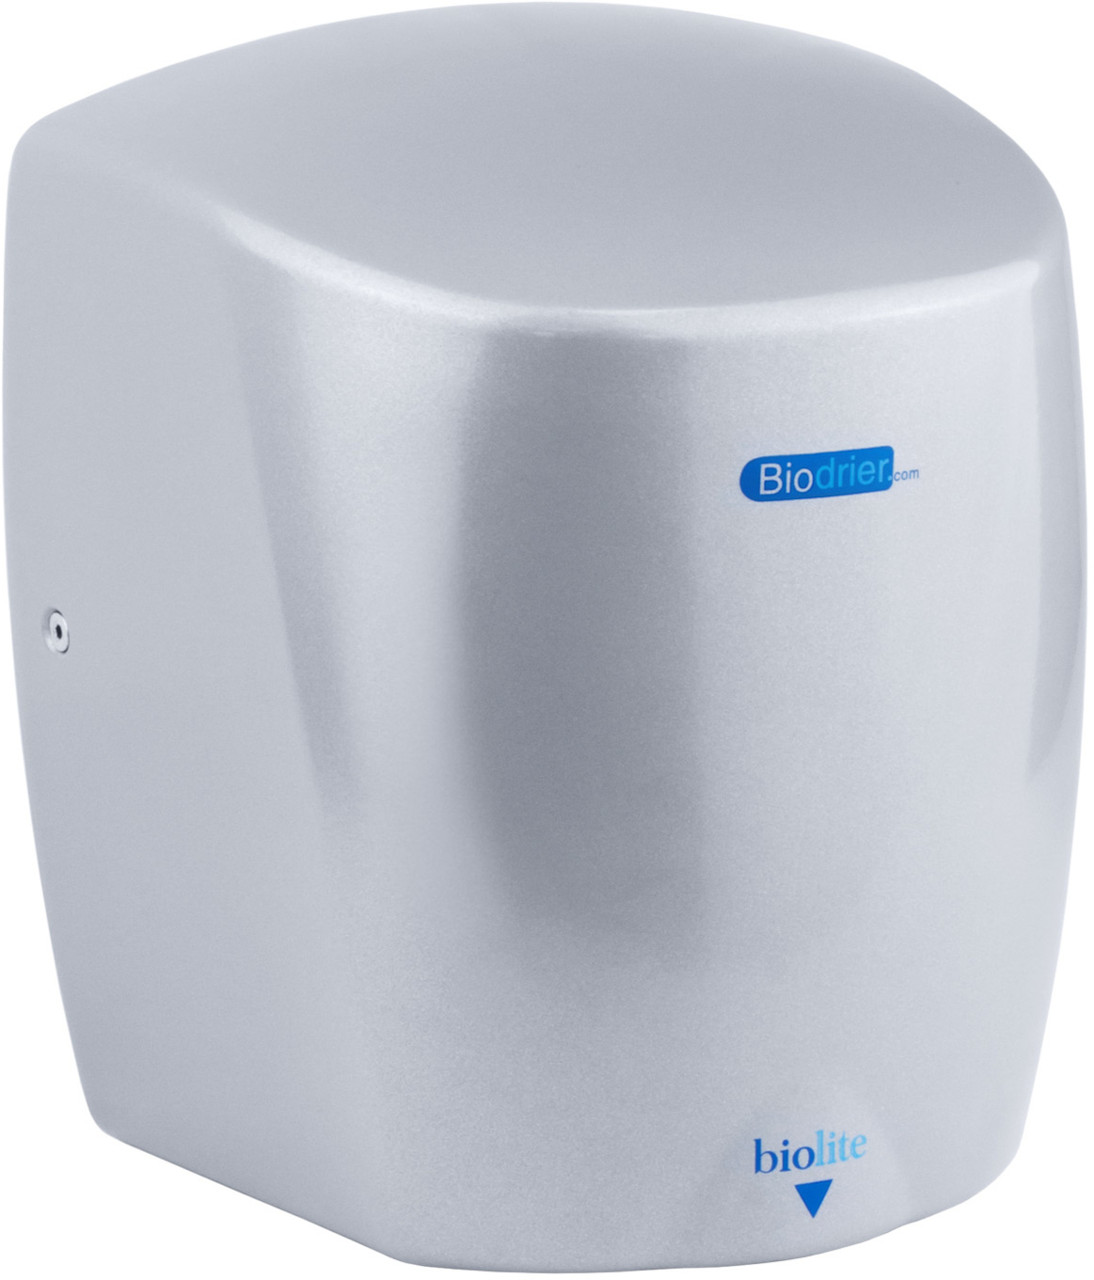 HD-BL09S - Biodrier Biolite Hand Dryer - Silver - Right